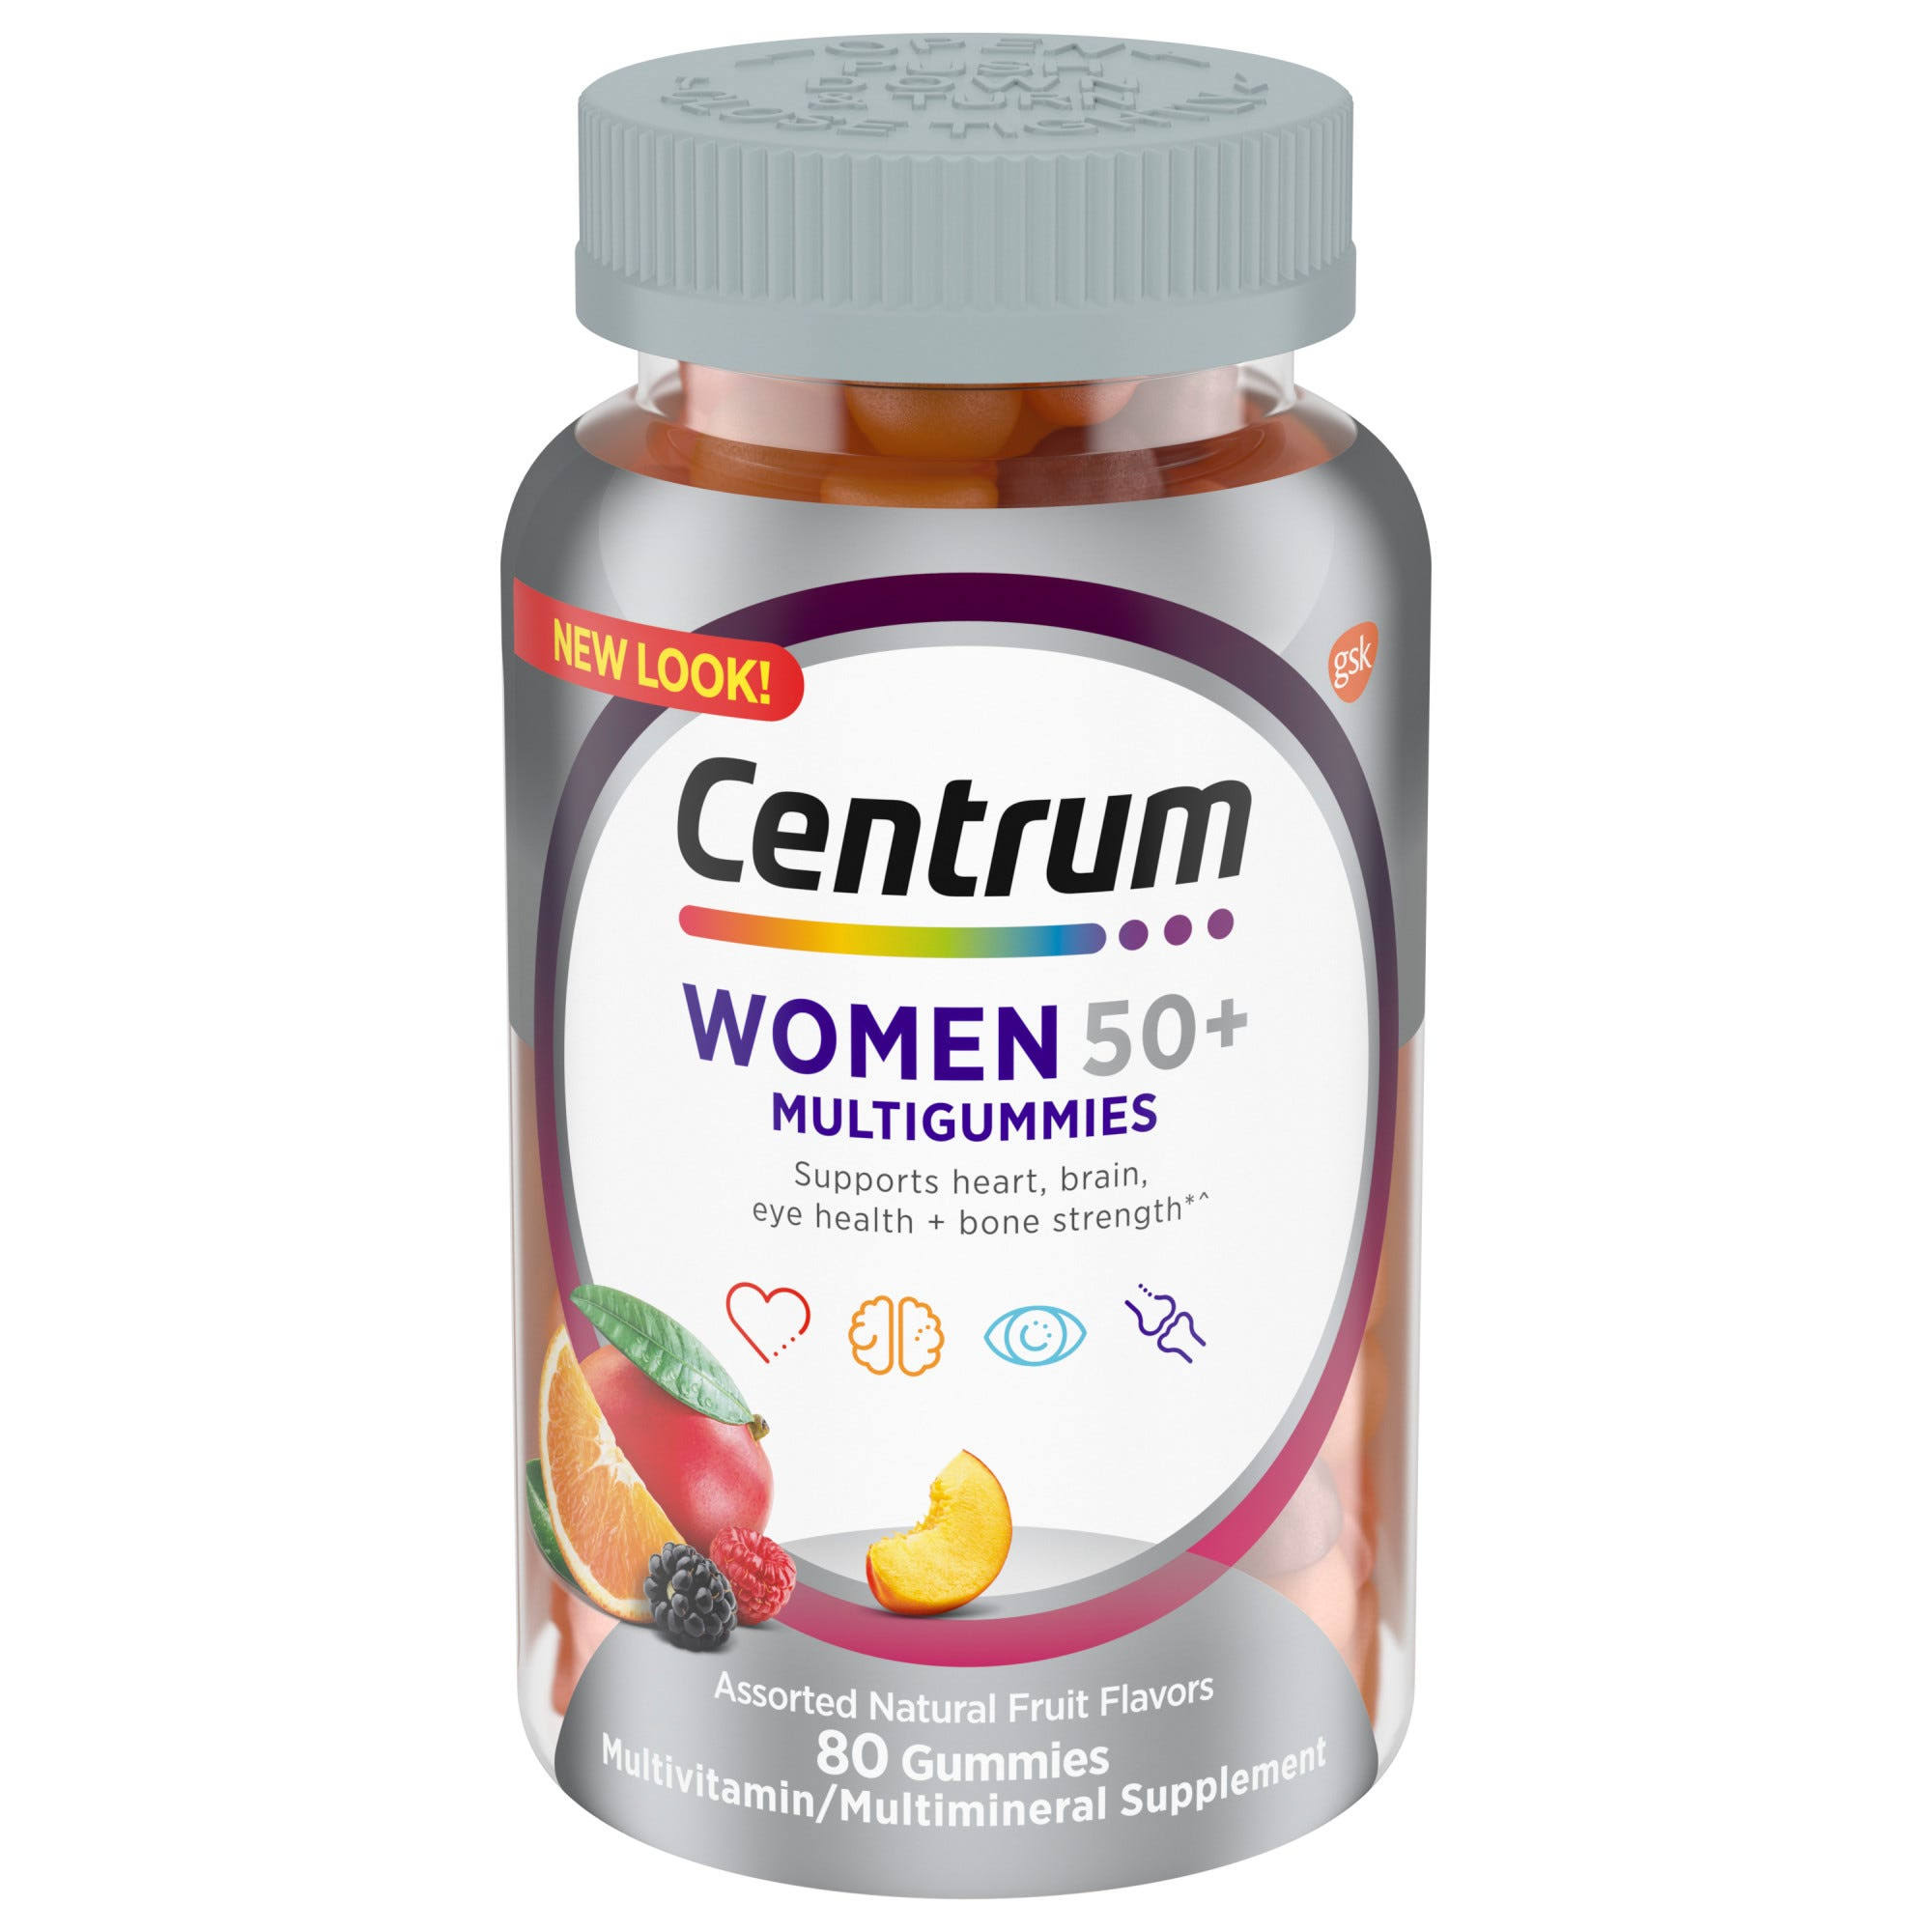 Centrum Multivitamin/Multimineral Supplement, Assorted Natural Fruit Flavors - 80 gummies